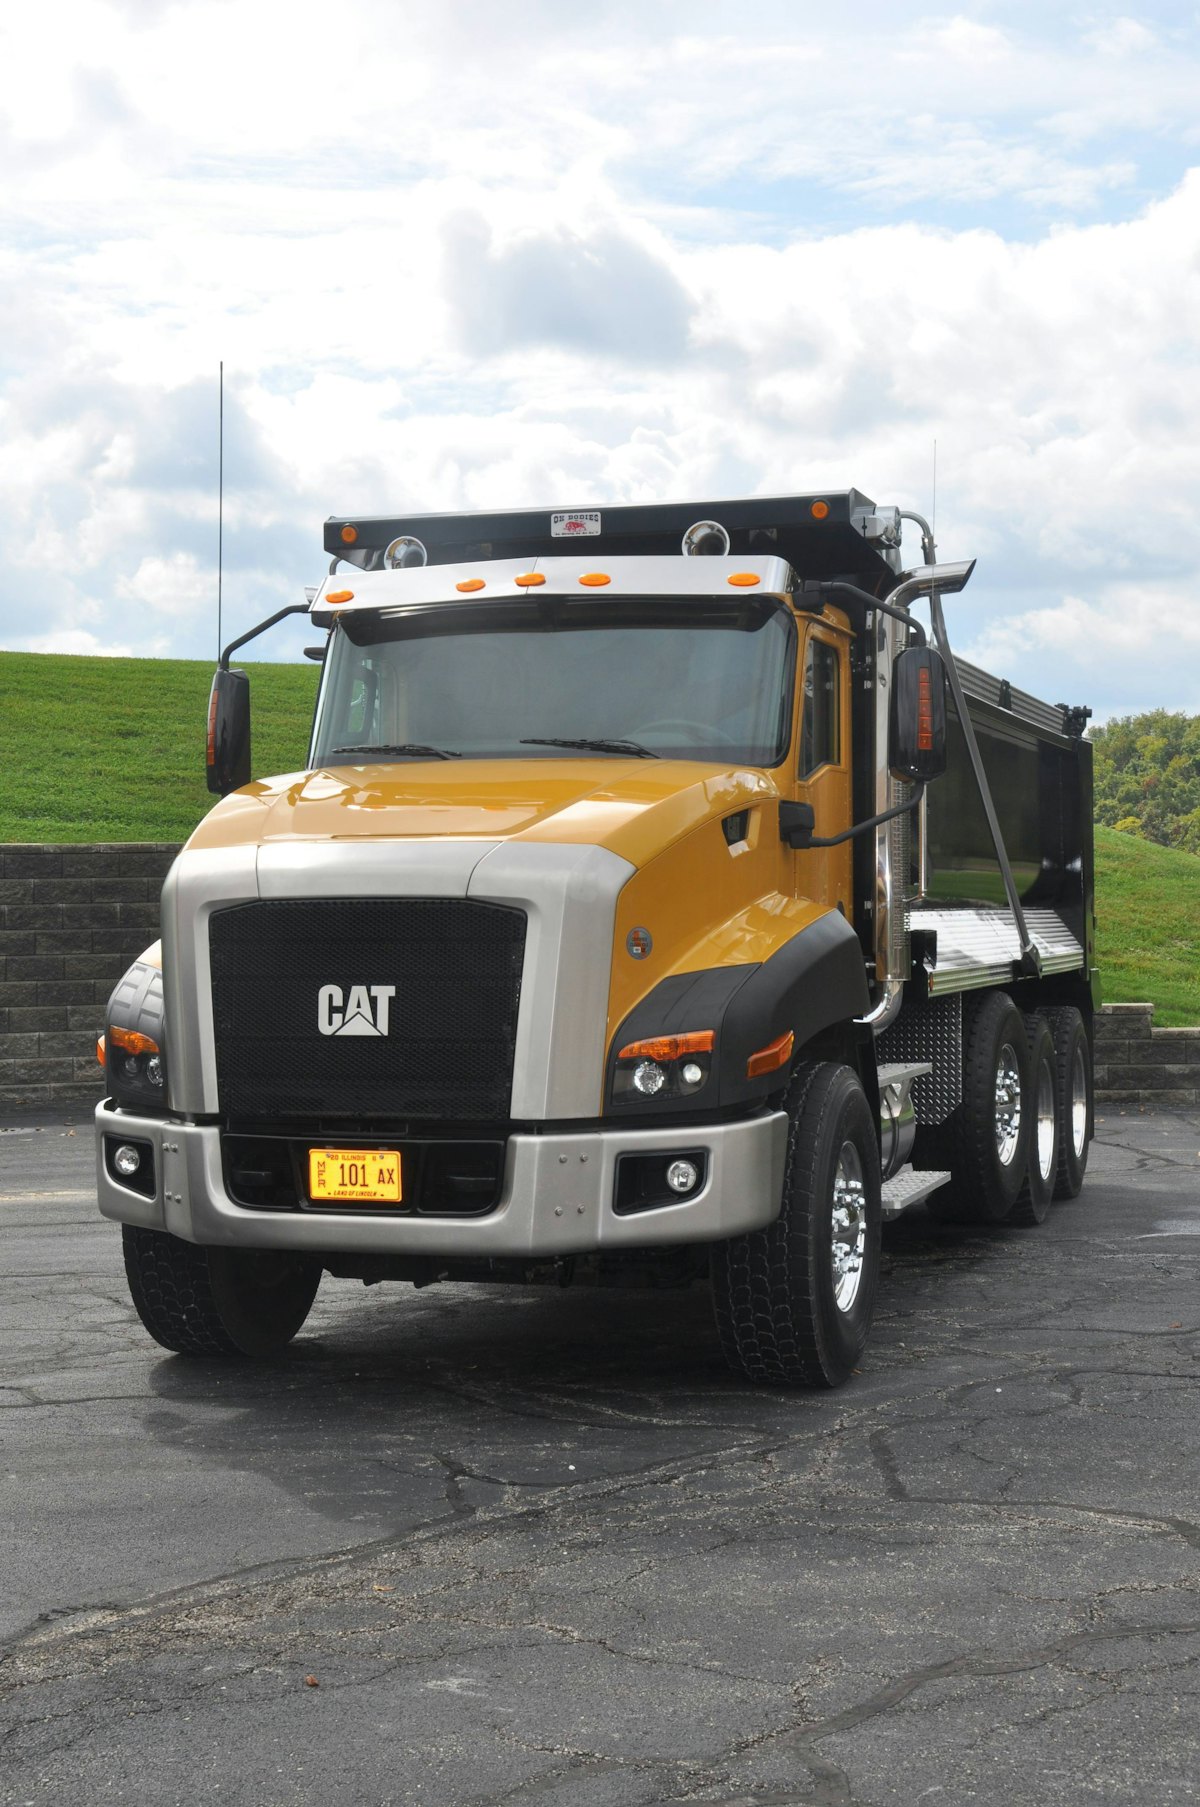 Road test: Caterpillar's CT660 vocational truck